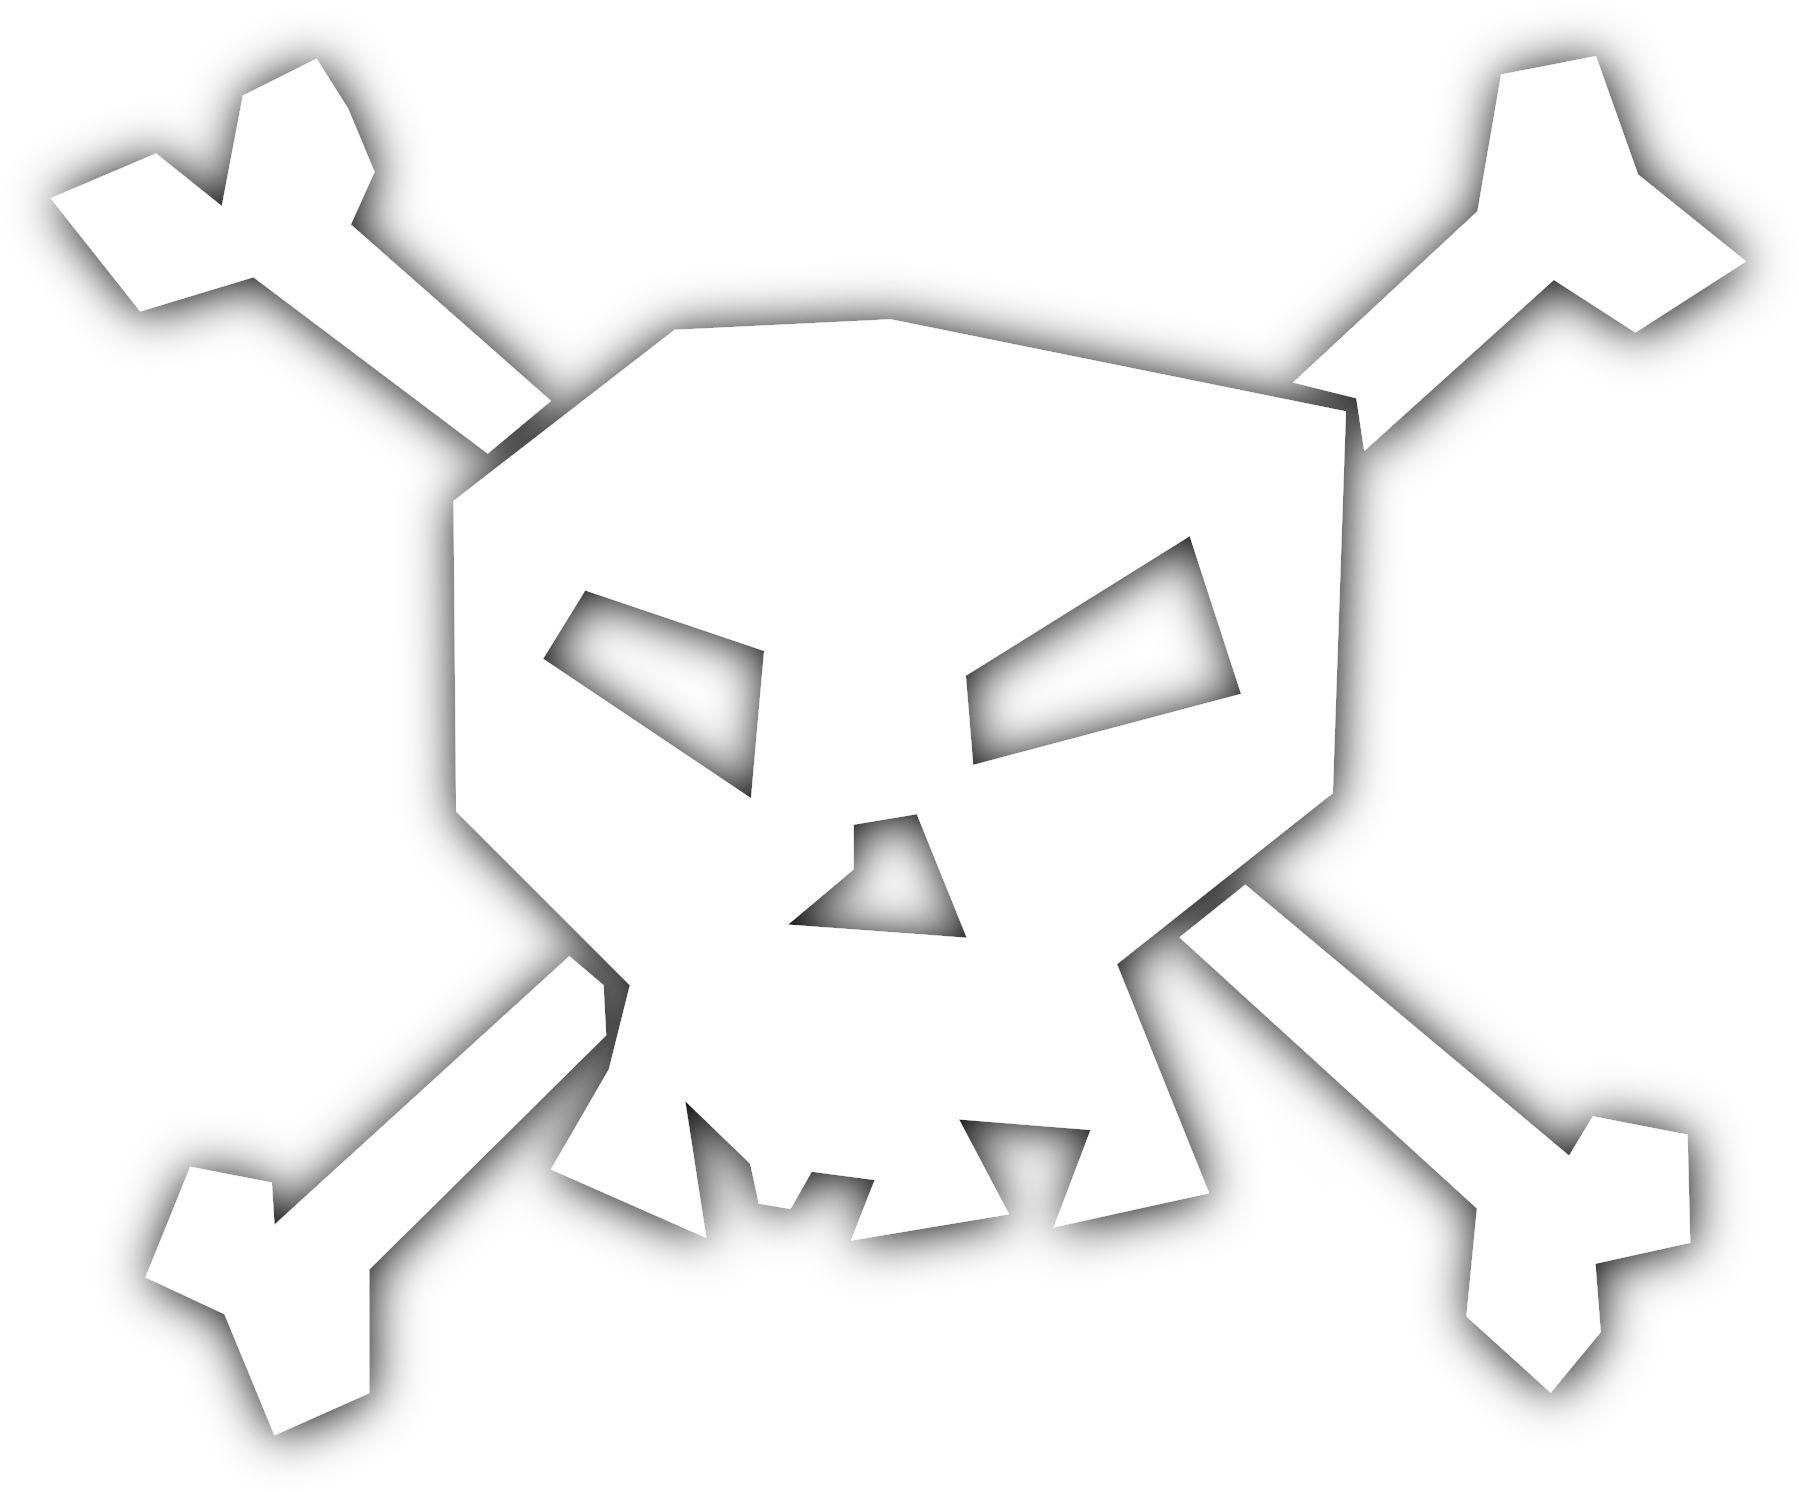 A White Skull With Crossed Bones